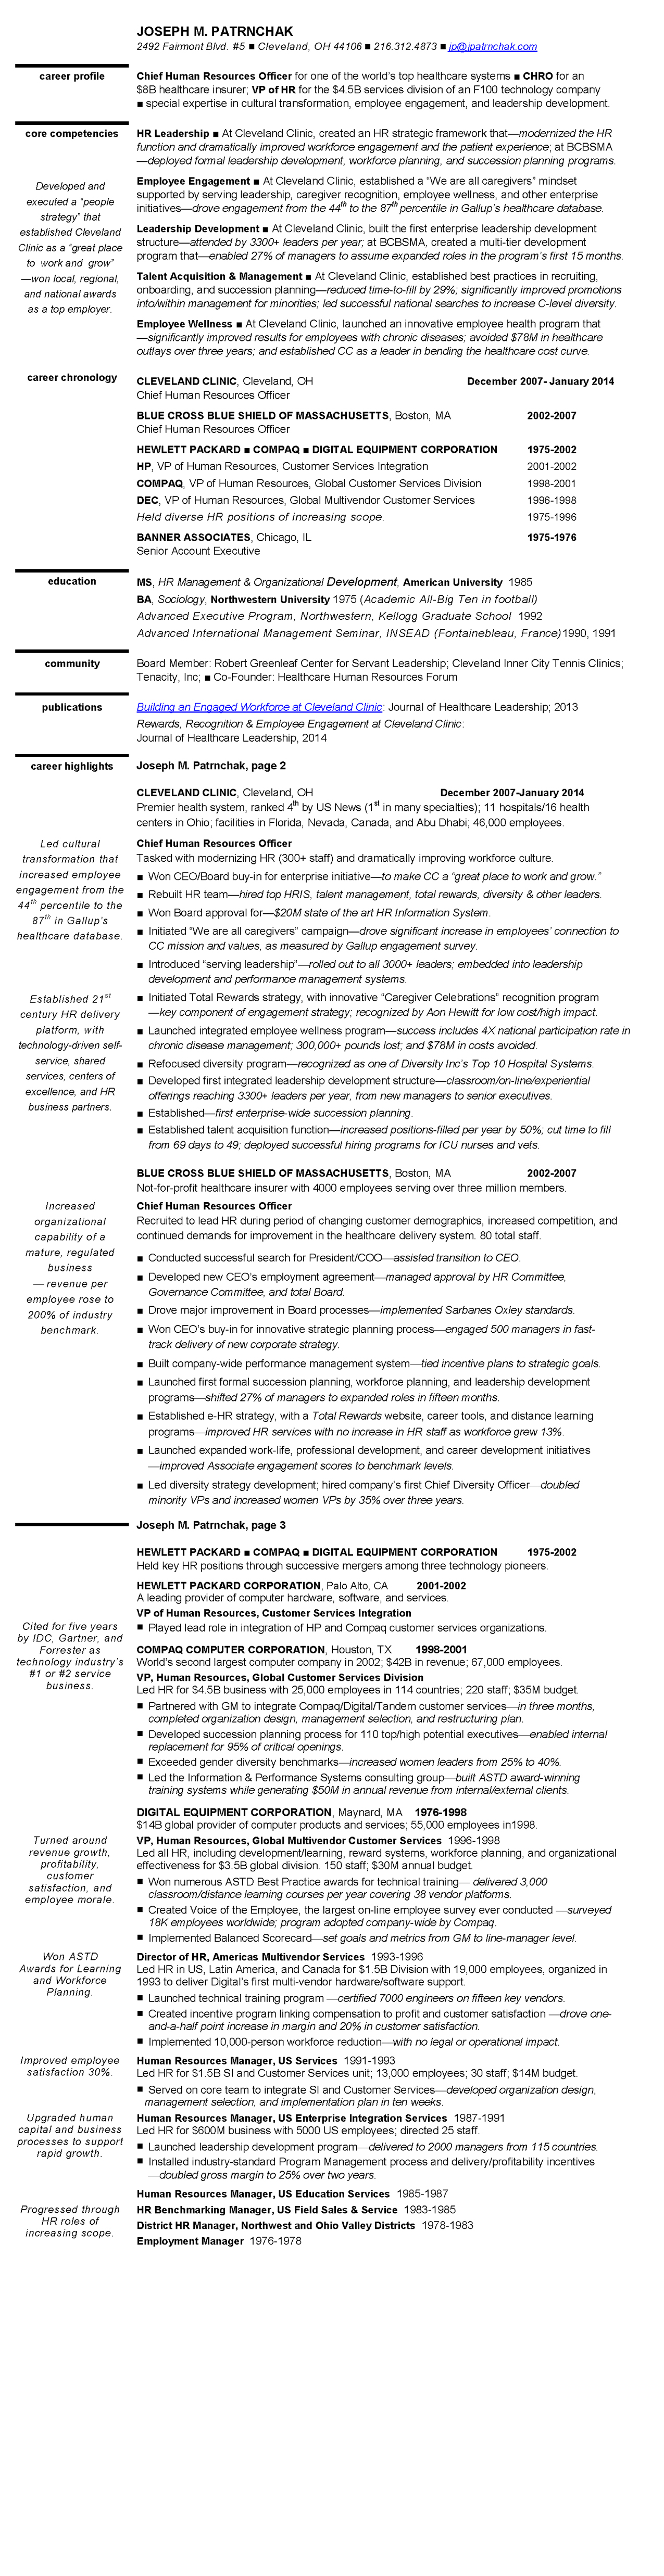 Joe Patrnchak resume text.  Download pdf for full version.